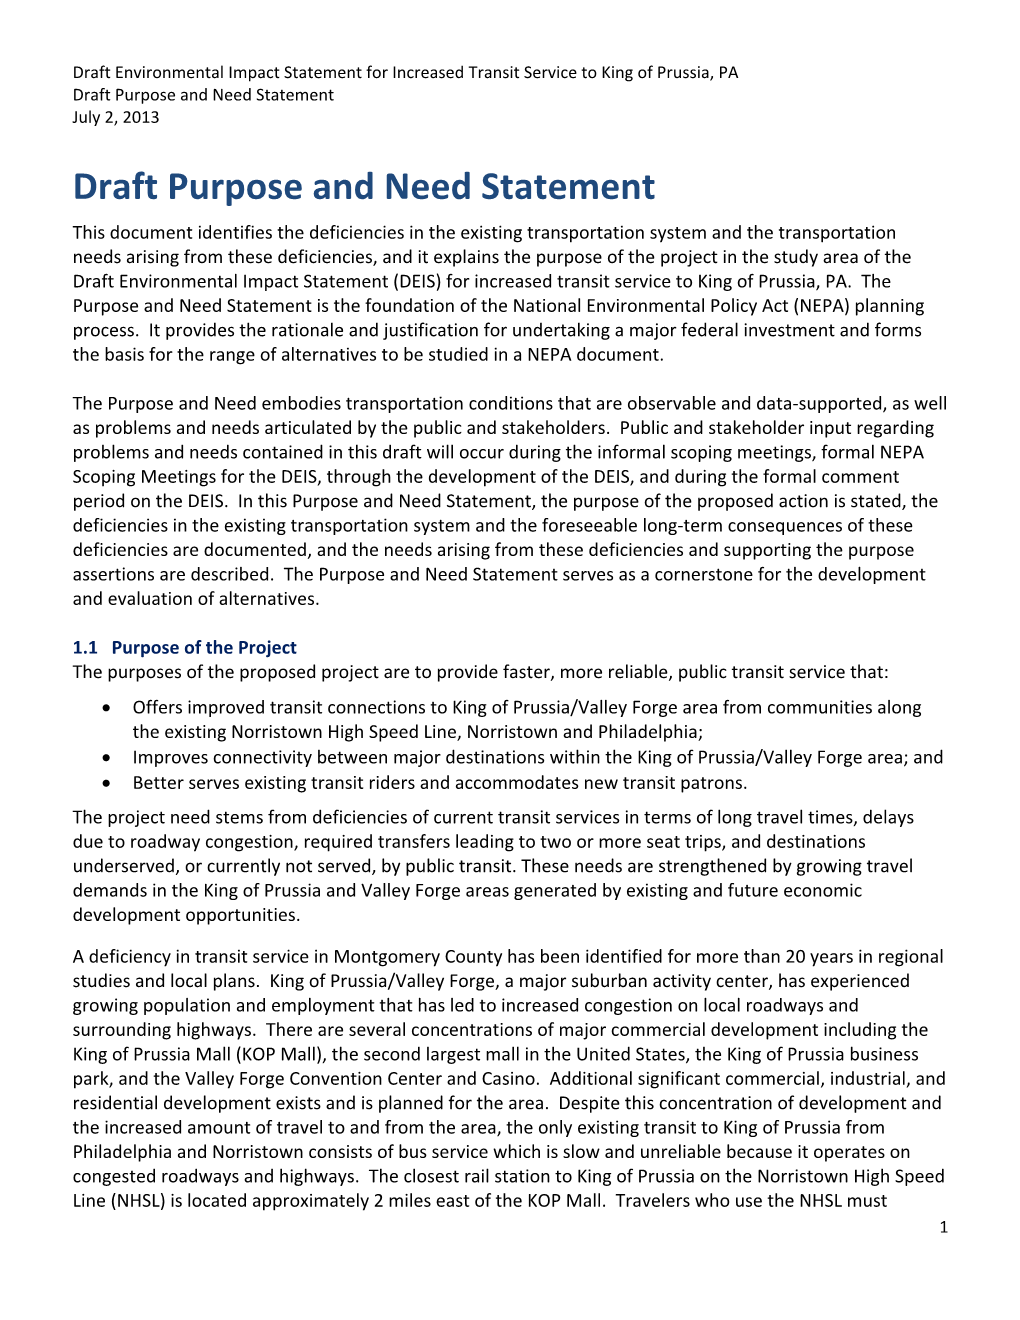 Draft Purpose and Need Statement July 2, 2013